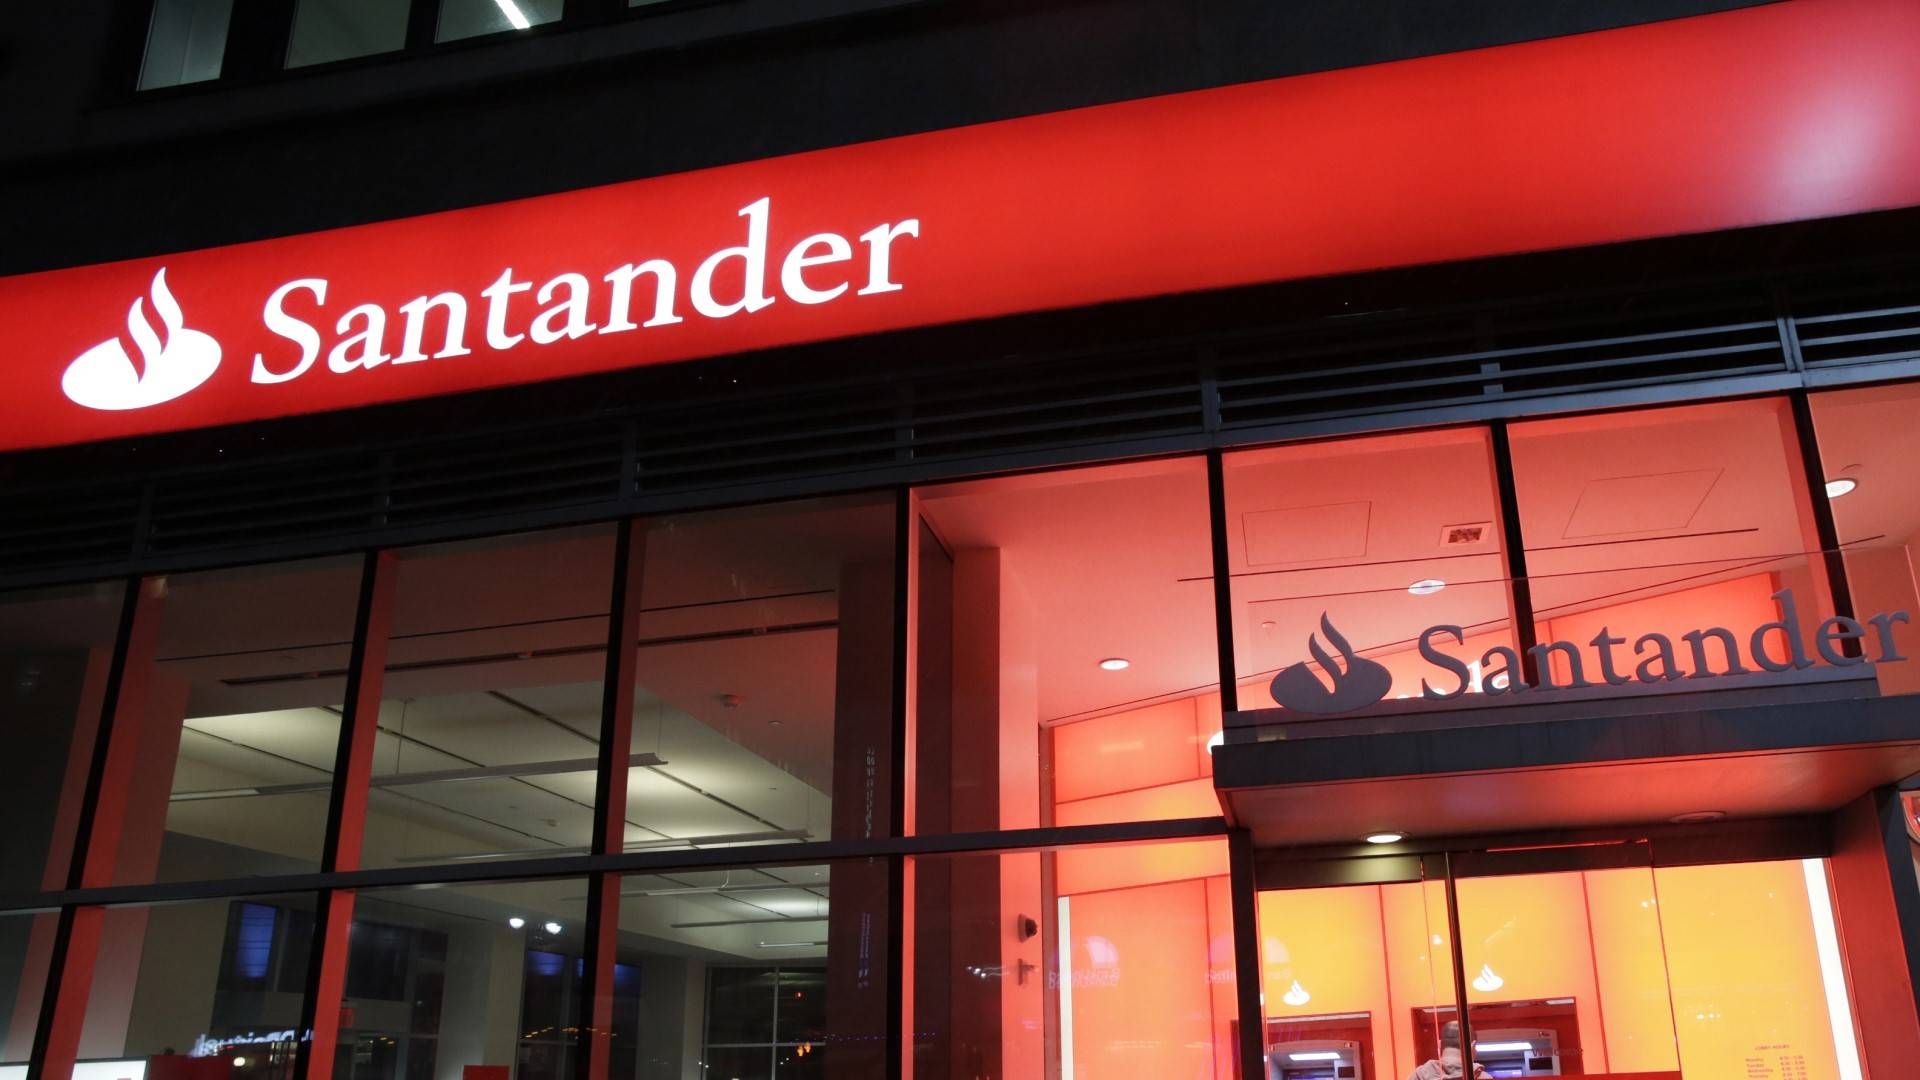 Banco Santander fikk et rekordstort tap i andre kvartal. | Foto: NTB scanpix/AP Photo/Mark Lennihan